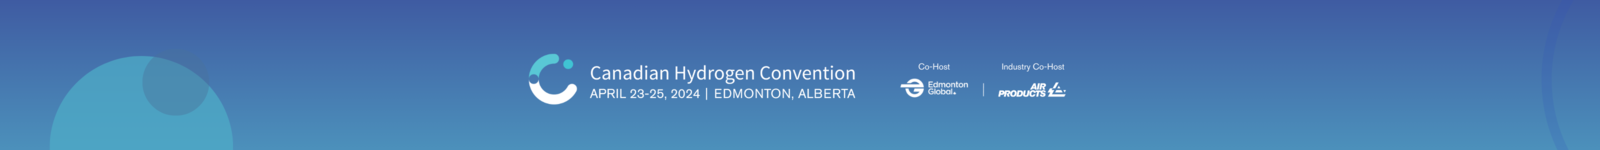 Canadian Hydrogen Expo logo